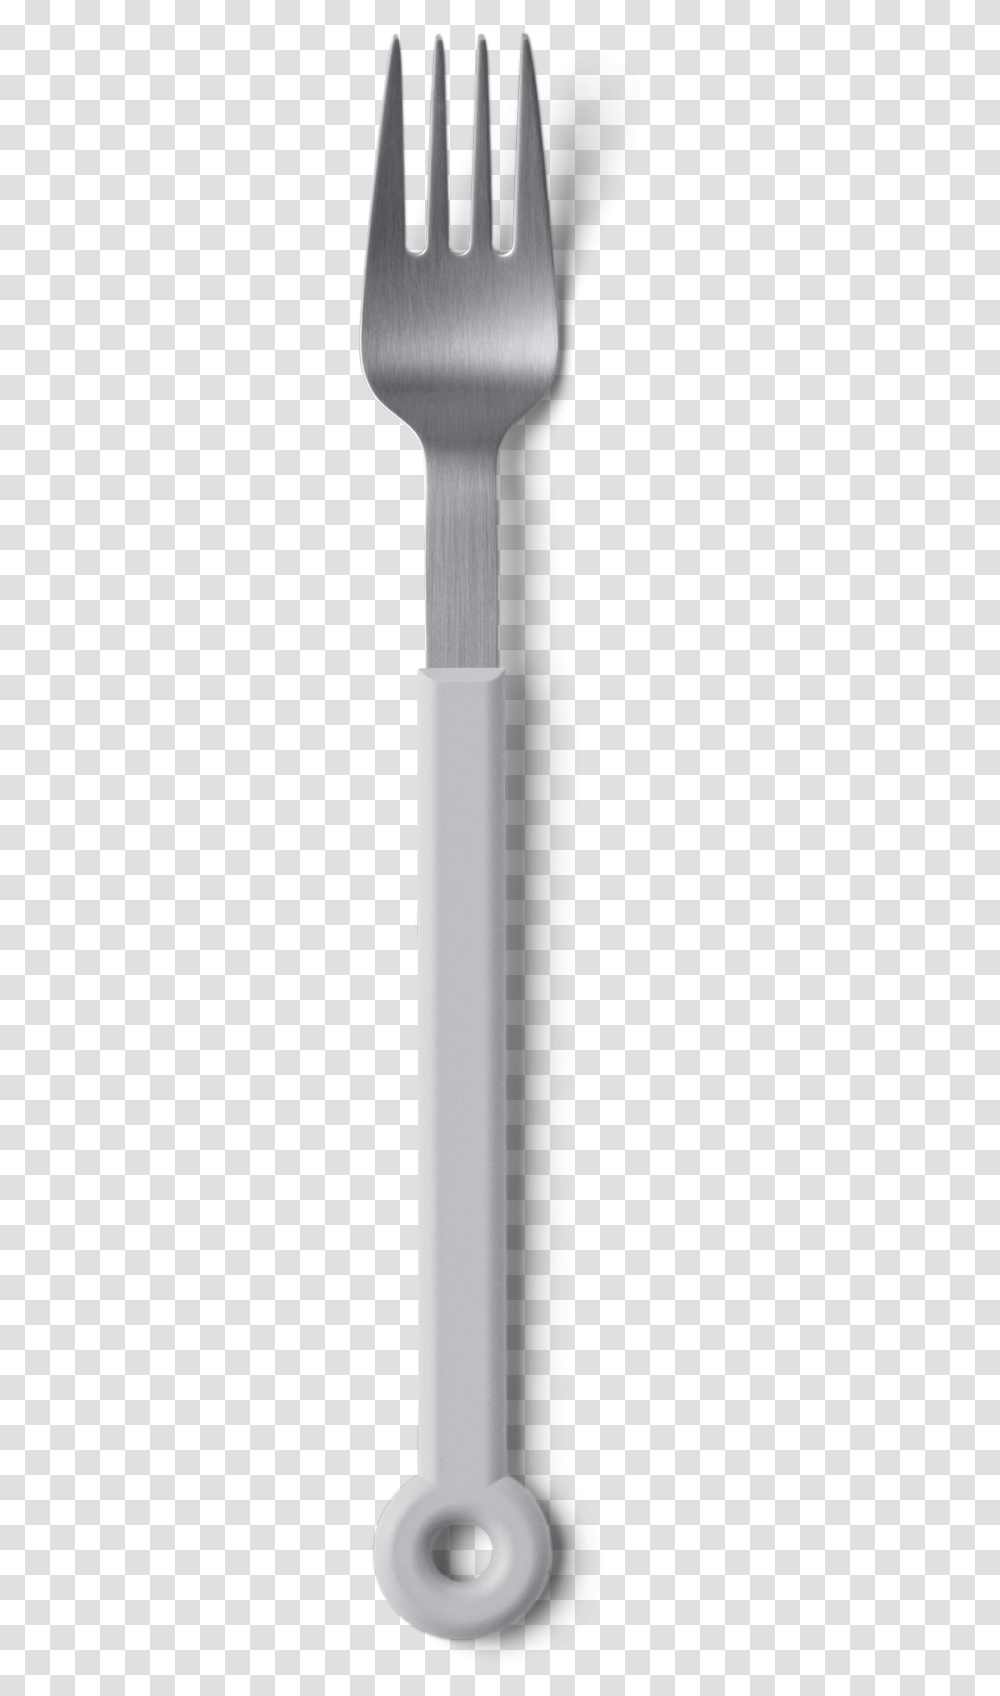 Mono Ring Table Fork White Fork, Spoon, Cutlery, PEZ Dispenser, Lighter Transparent Png